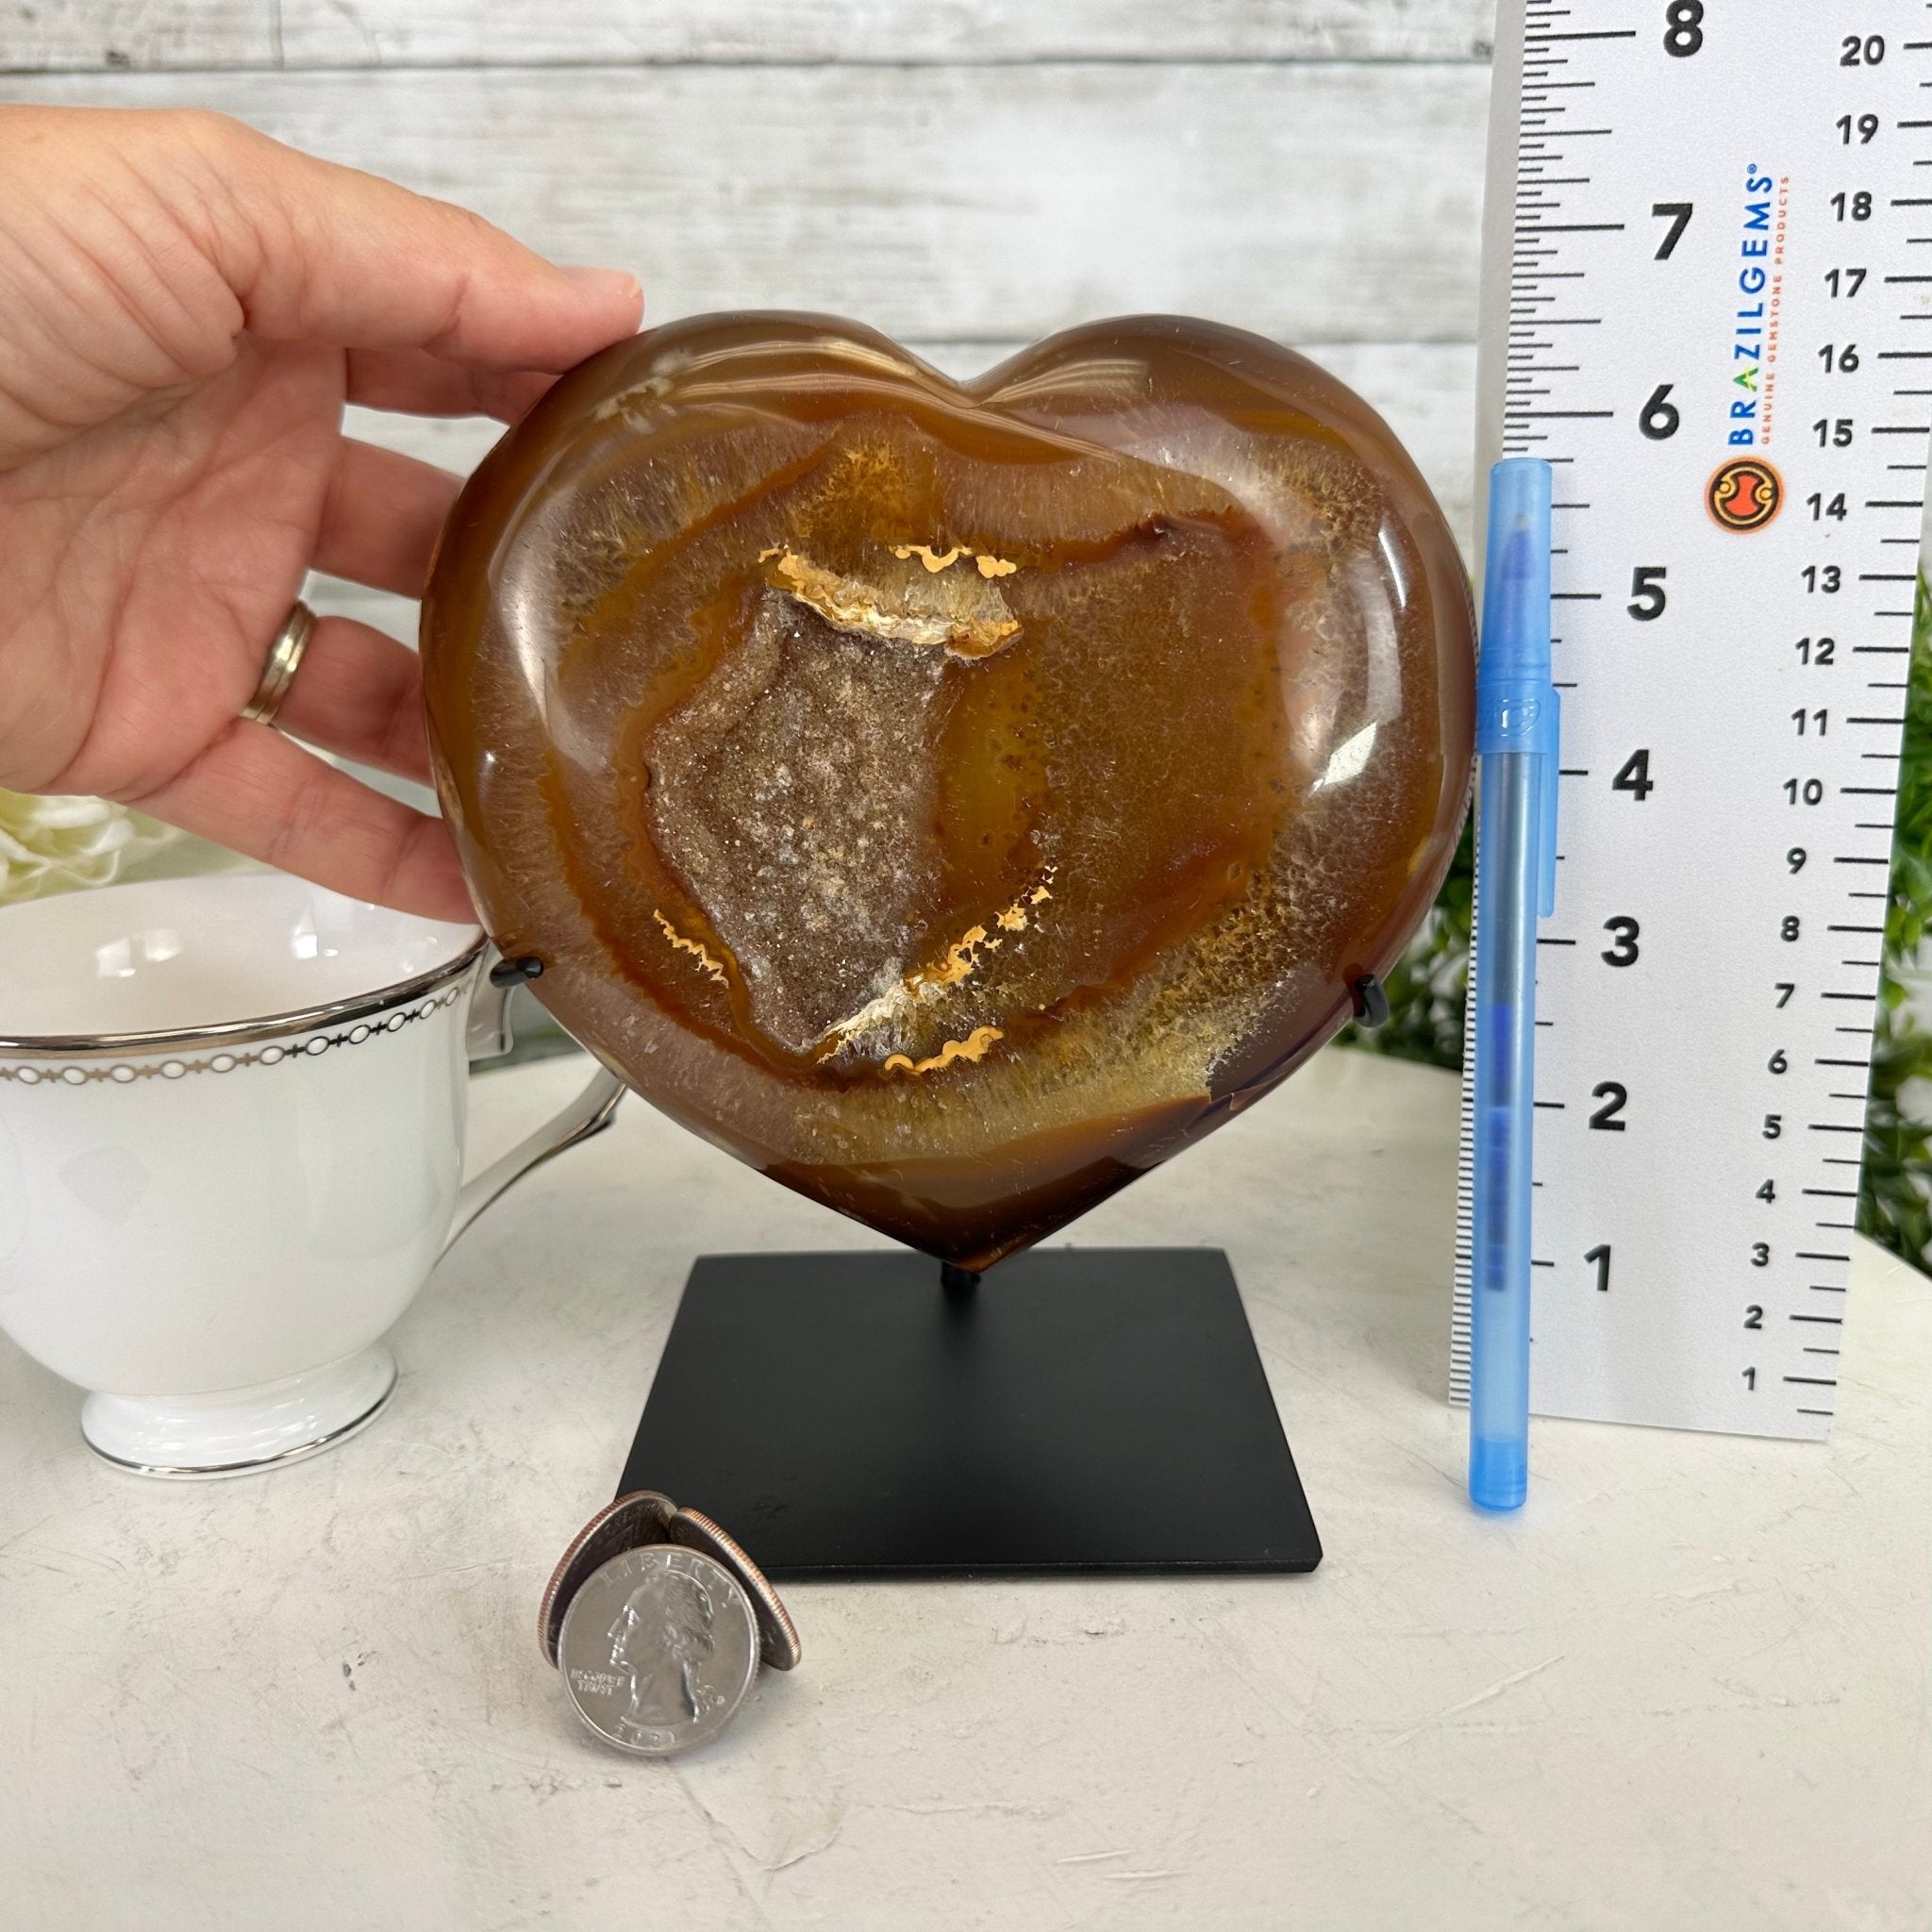 Polished Agate Heart Geode on a Metal Stand, 4 lbs & 6.8" Tall, Model #5468-0069 by Brazil Gems - Brazil GemsBrazil GemsPolished Agate Heart Geode on a Metal Stand, 4 lbs & 6.8" Tall, Model #5468-0069 by Brazil GemsHearts5468-0069